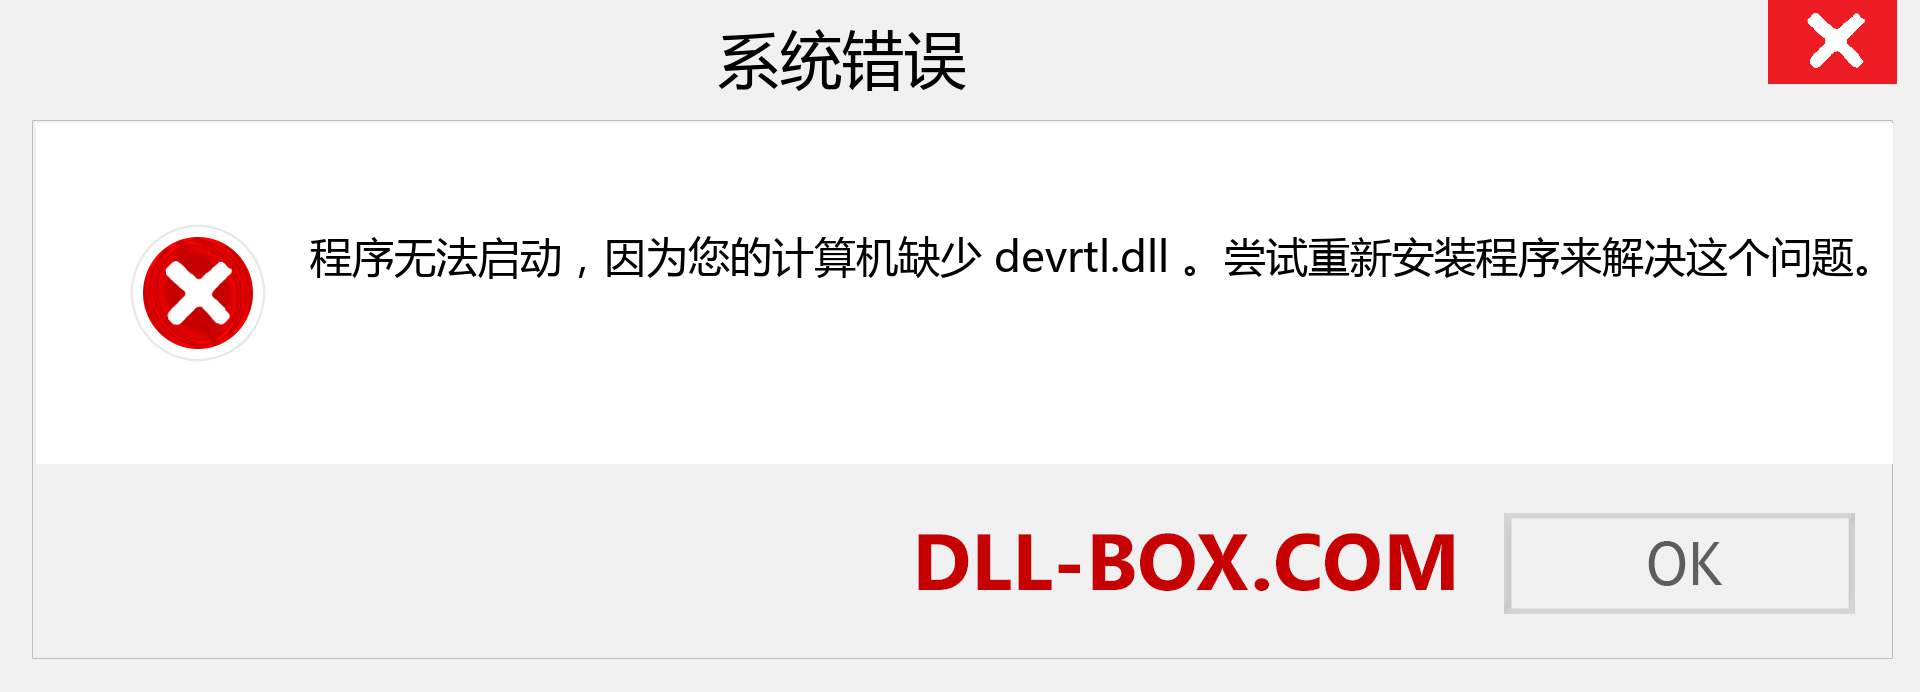 devrtl.dll 文件丢失？。 适用于 Windows 7、8、10 的下载 - 修复 Windows、照片、图像上的 devrtl dll 丢失错误